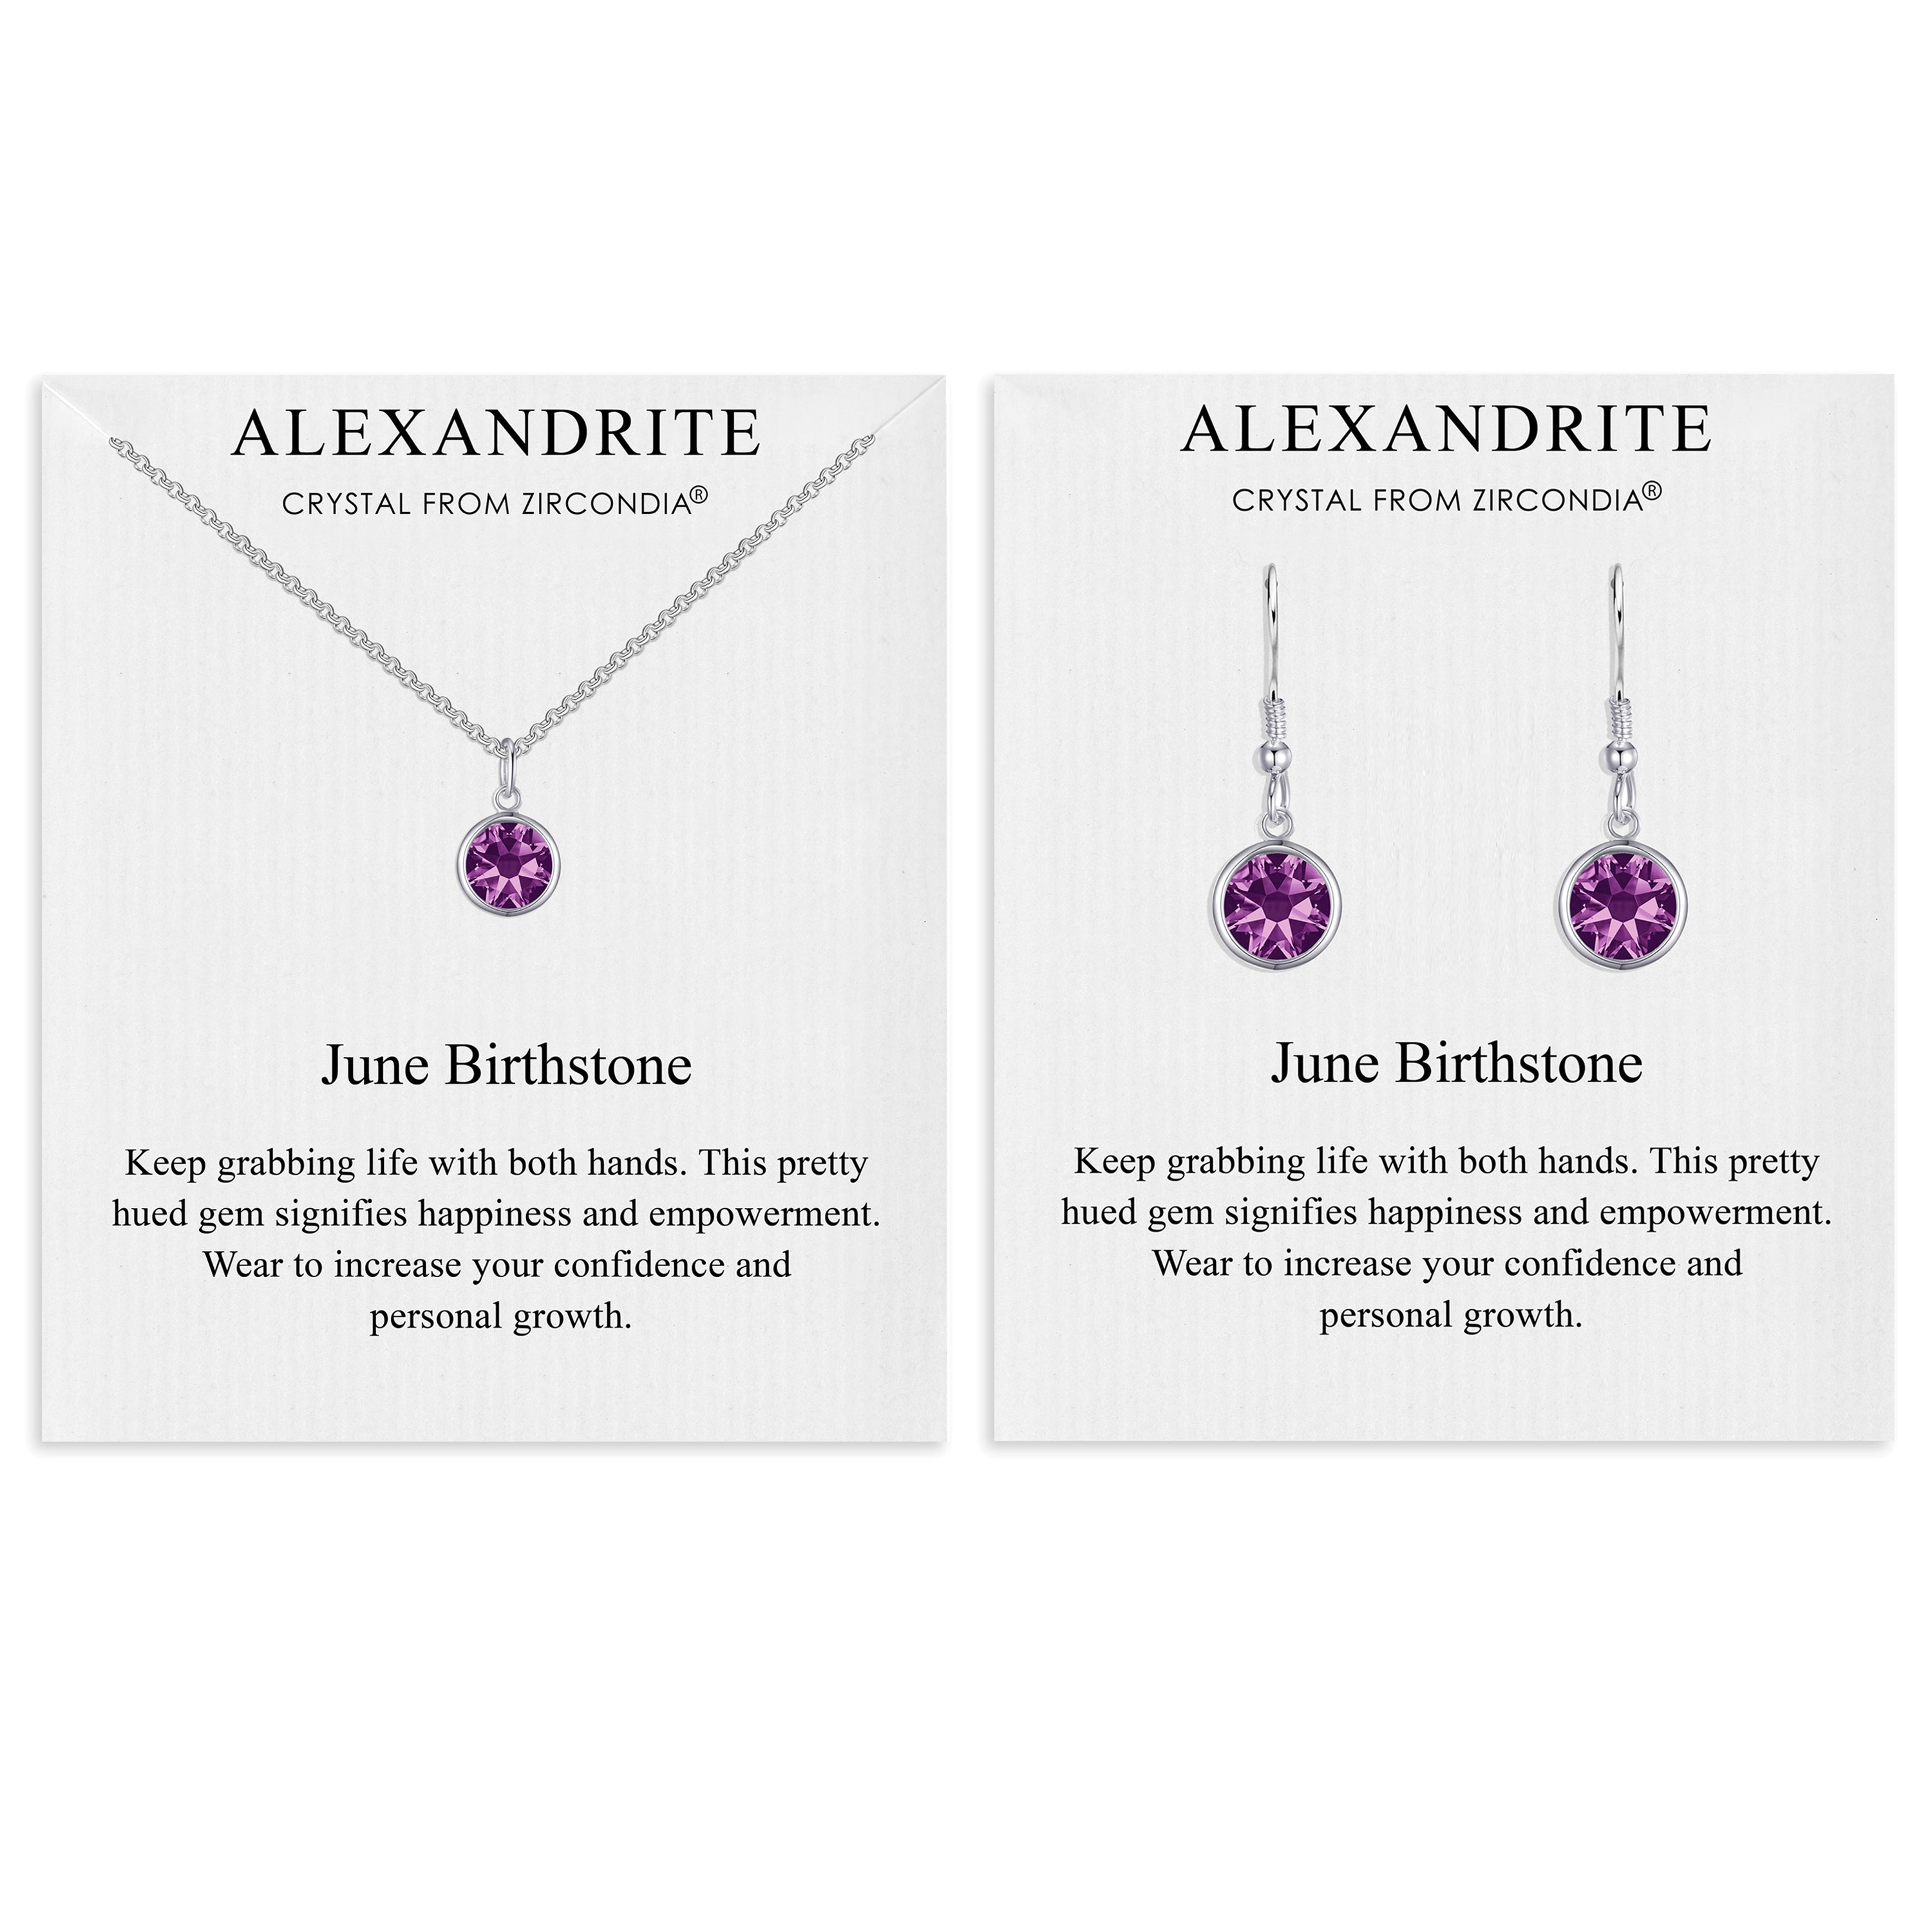 June (Alexandrite) Birthstone Necklace & Drop Earrings Set Created with Zircondia® Crystals by Philip Jones Jewellery